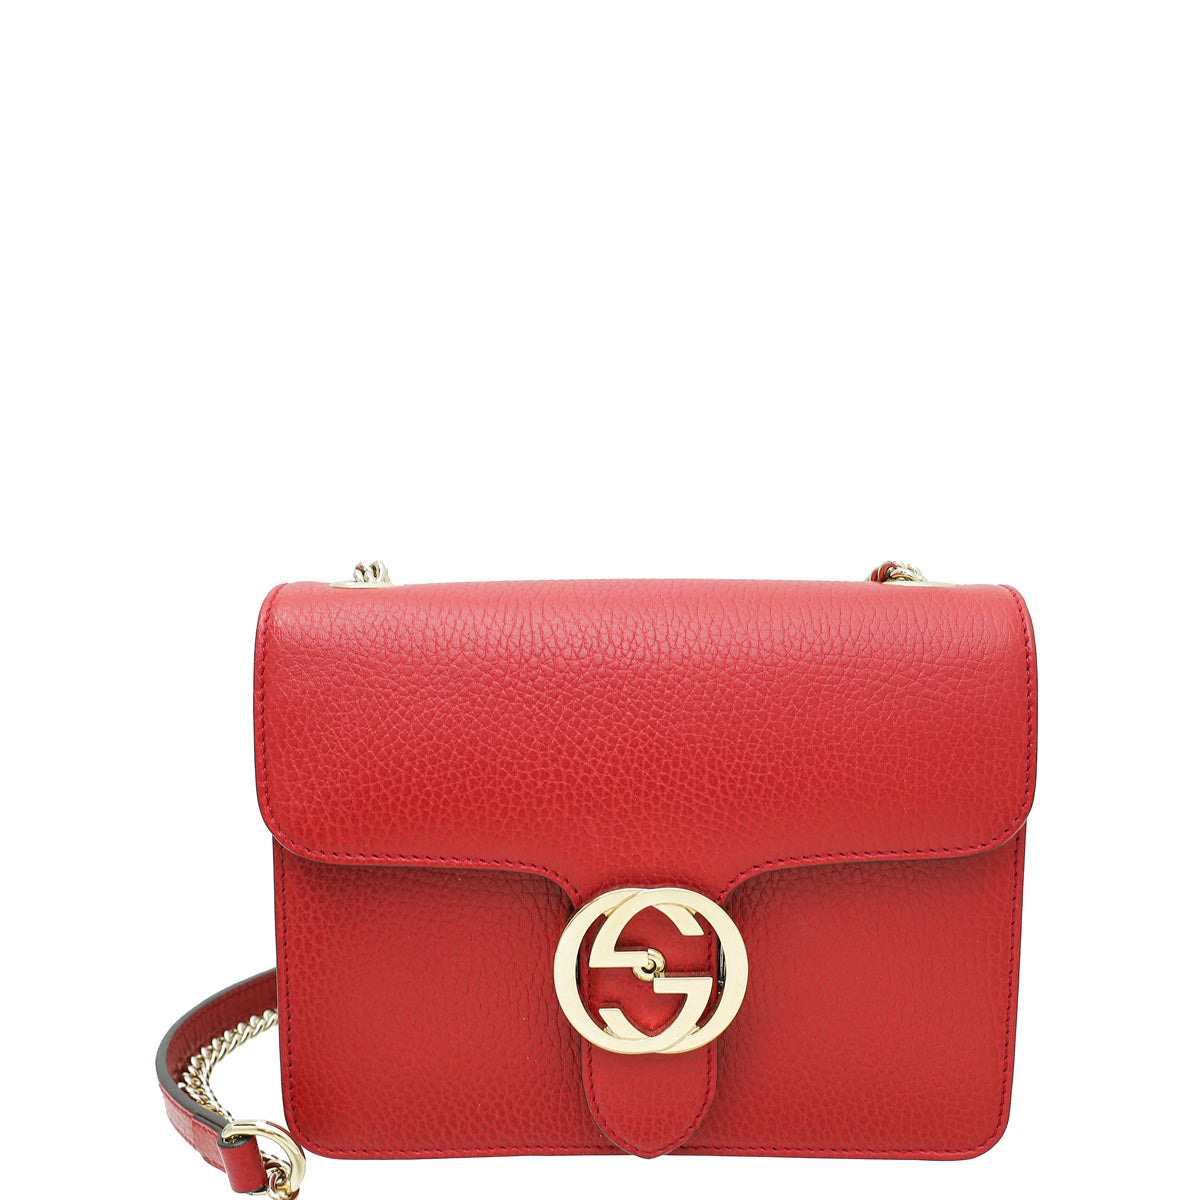 Gucci Red Leather Interlocking G Small Dollar Shoulder Bag, 44% OFF